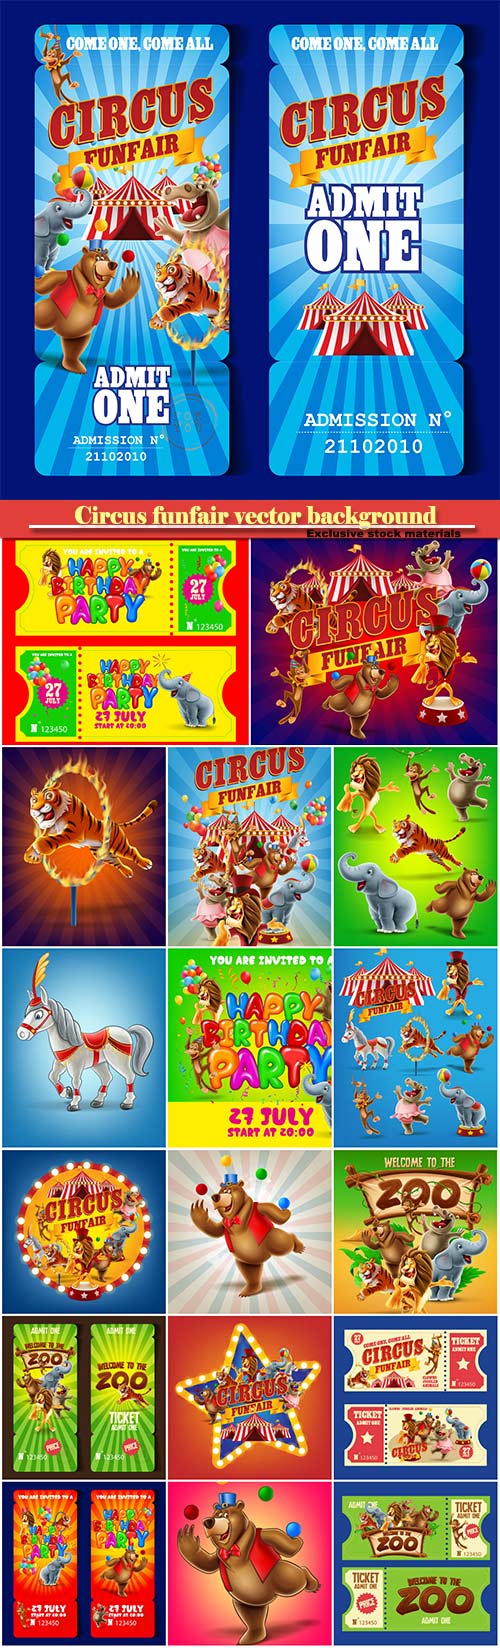 Circus funfair vector background